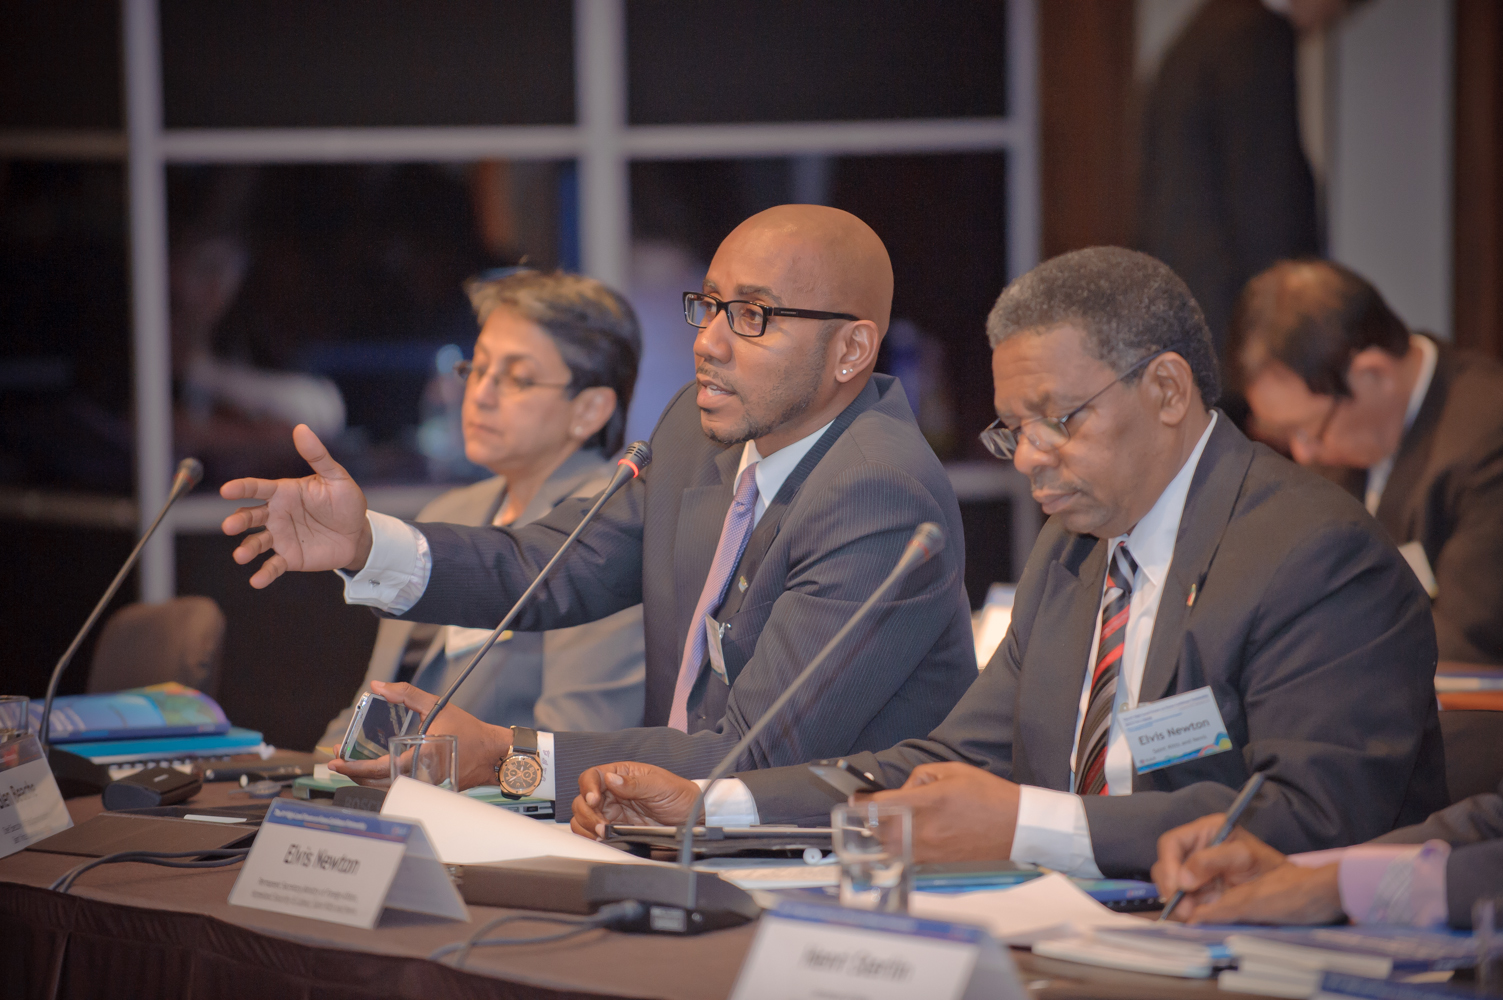 The 4th High-Level Forum on Korea-Caribbean Partnership